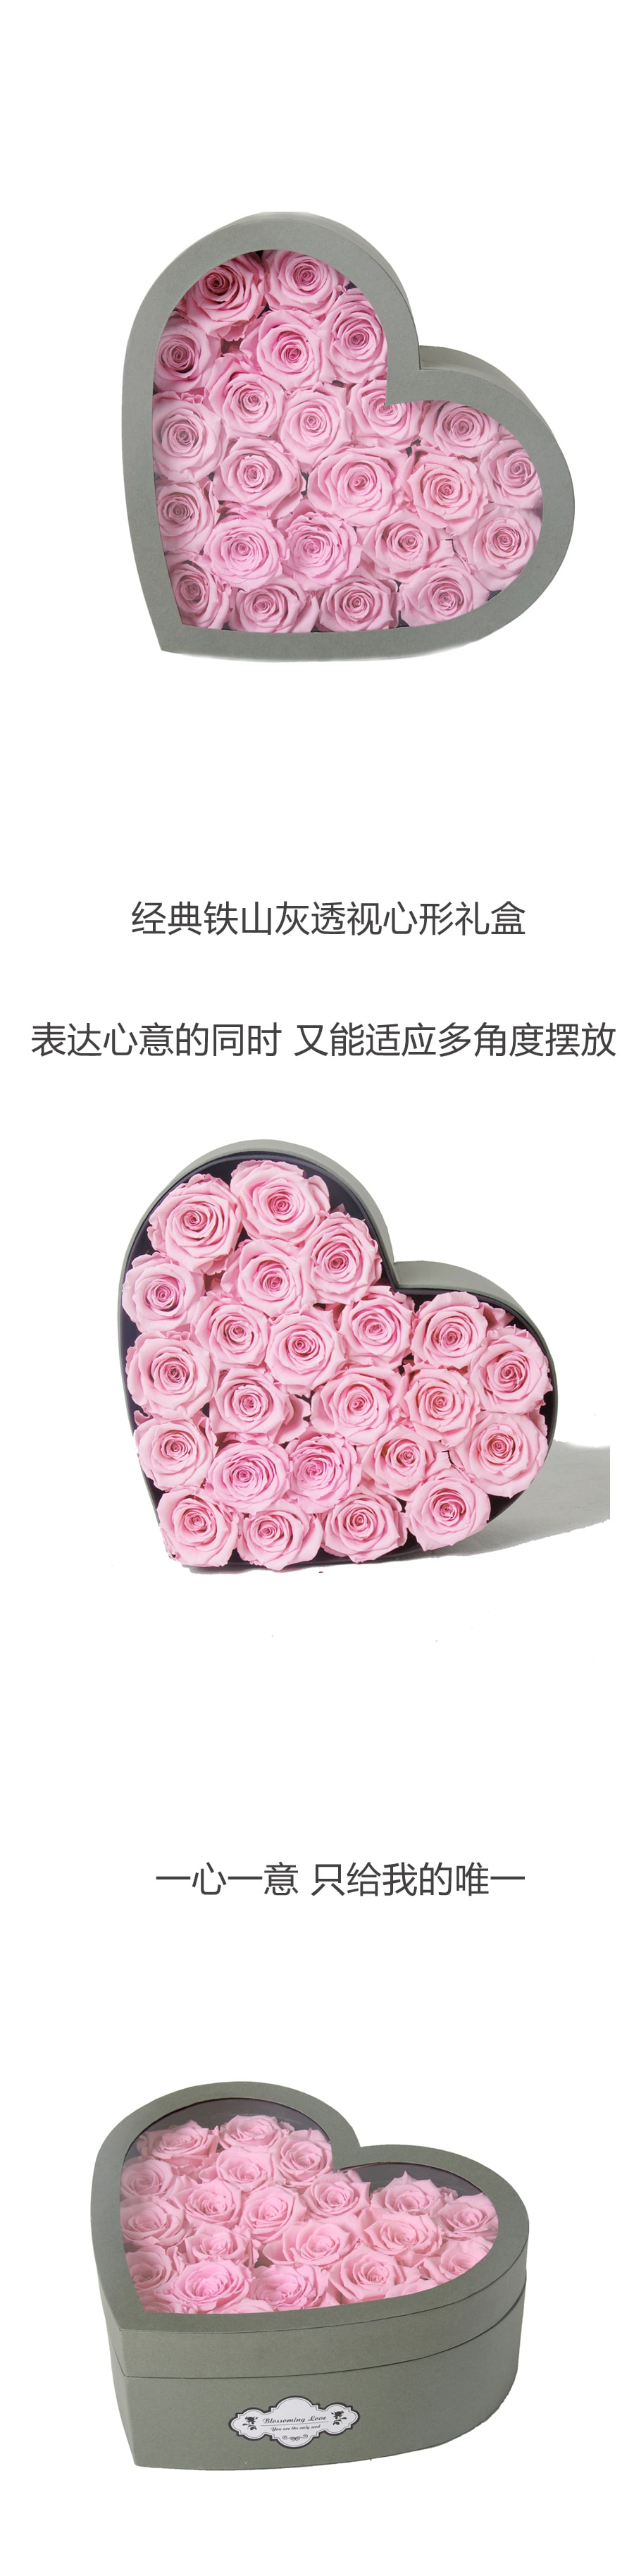 See-through heart-shaped box -pink roses